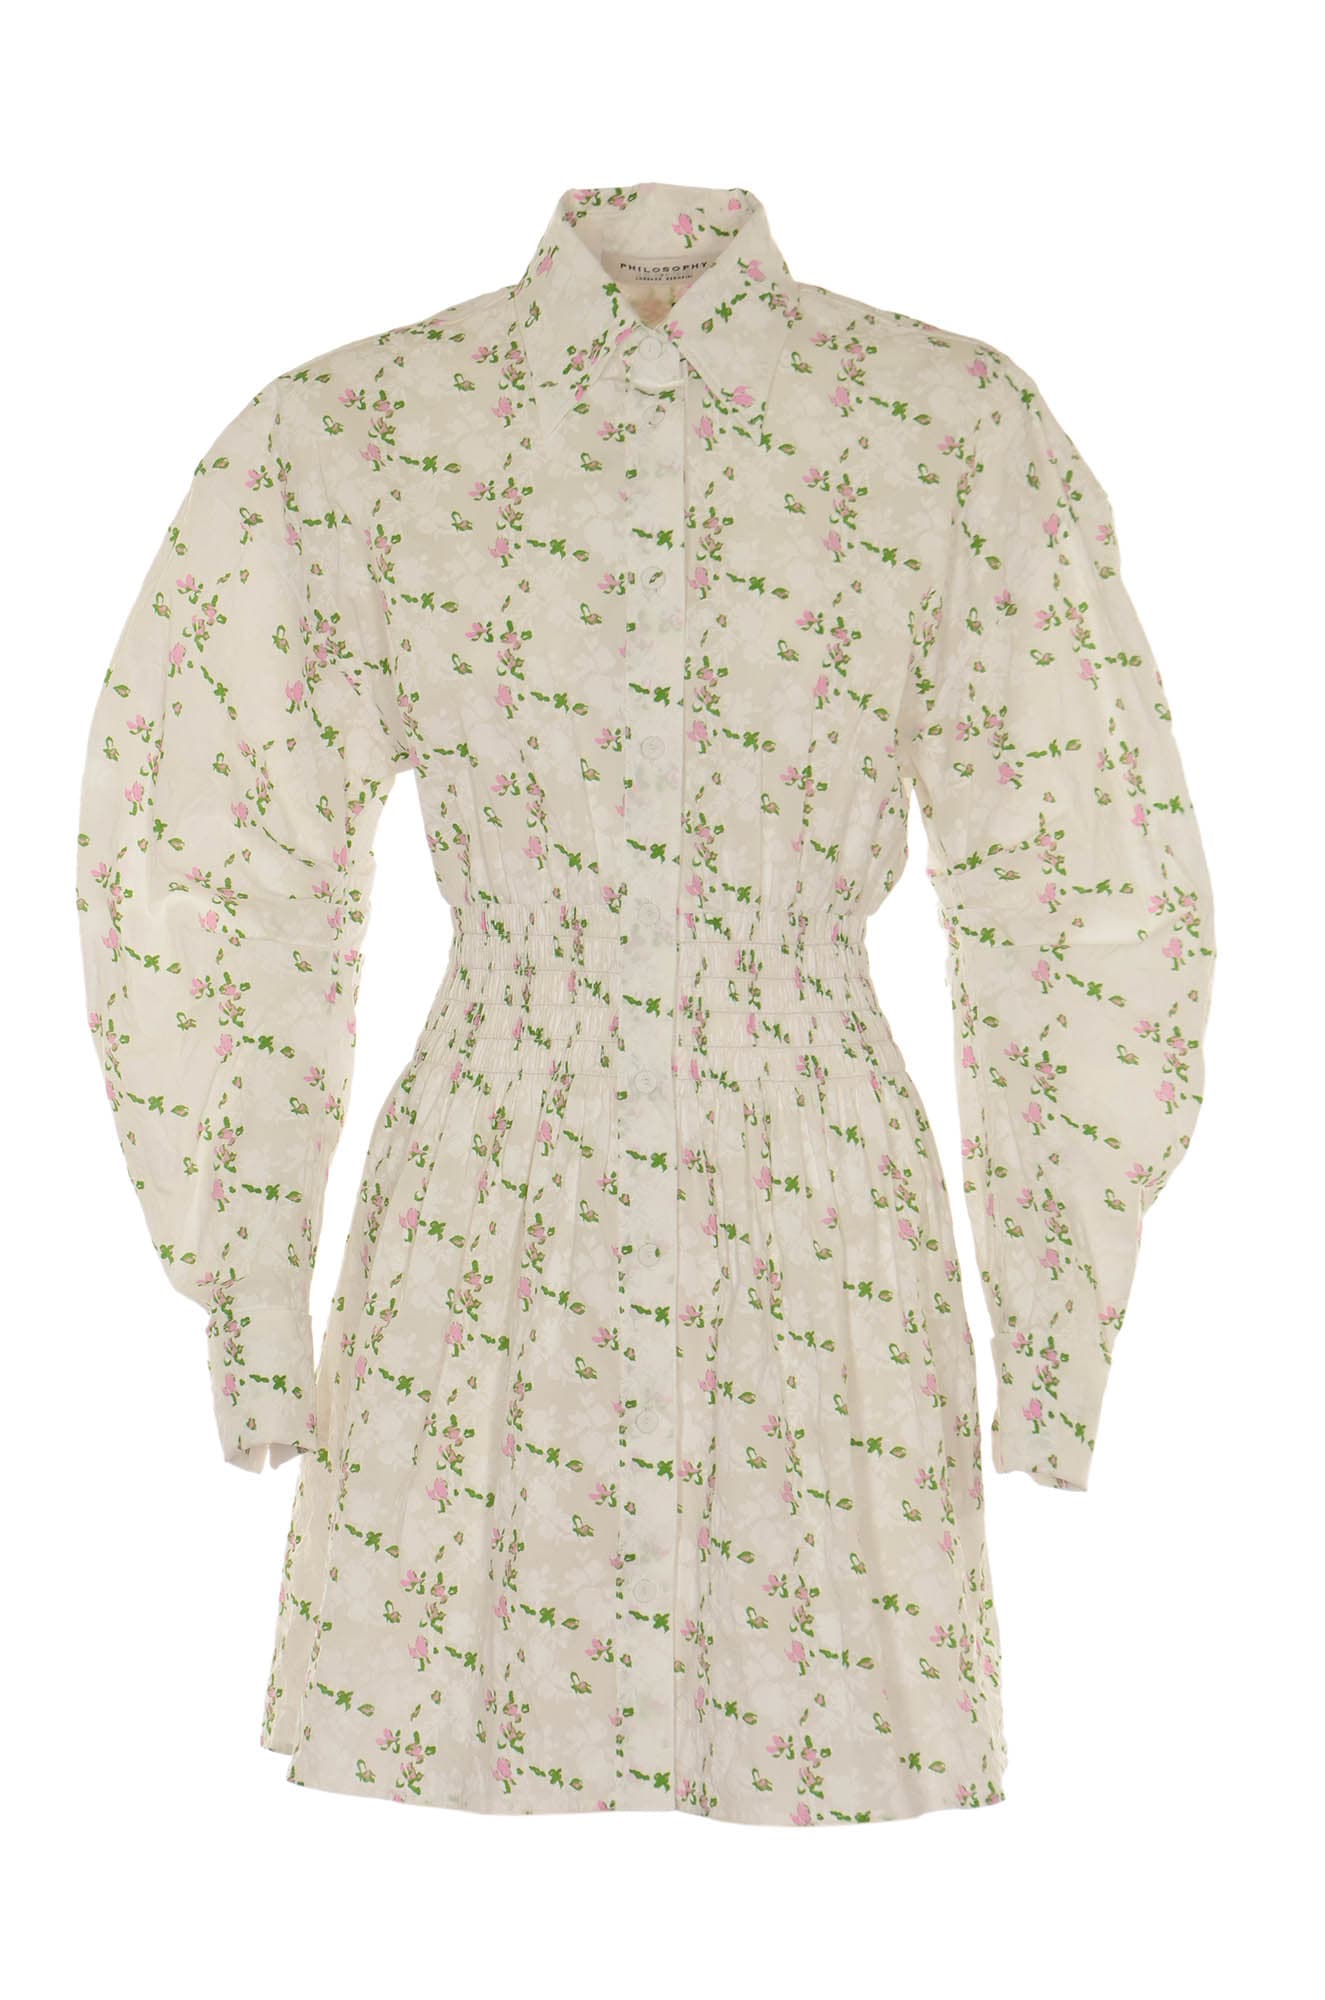 Philosophy di Lorenzo Serafini Floral Print Shirt Dress